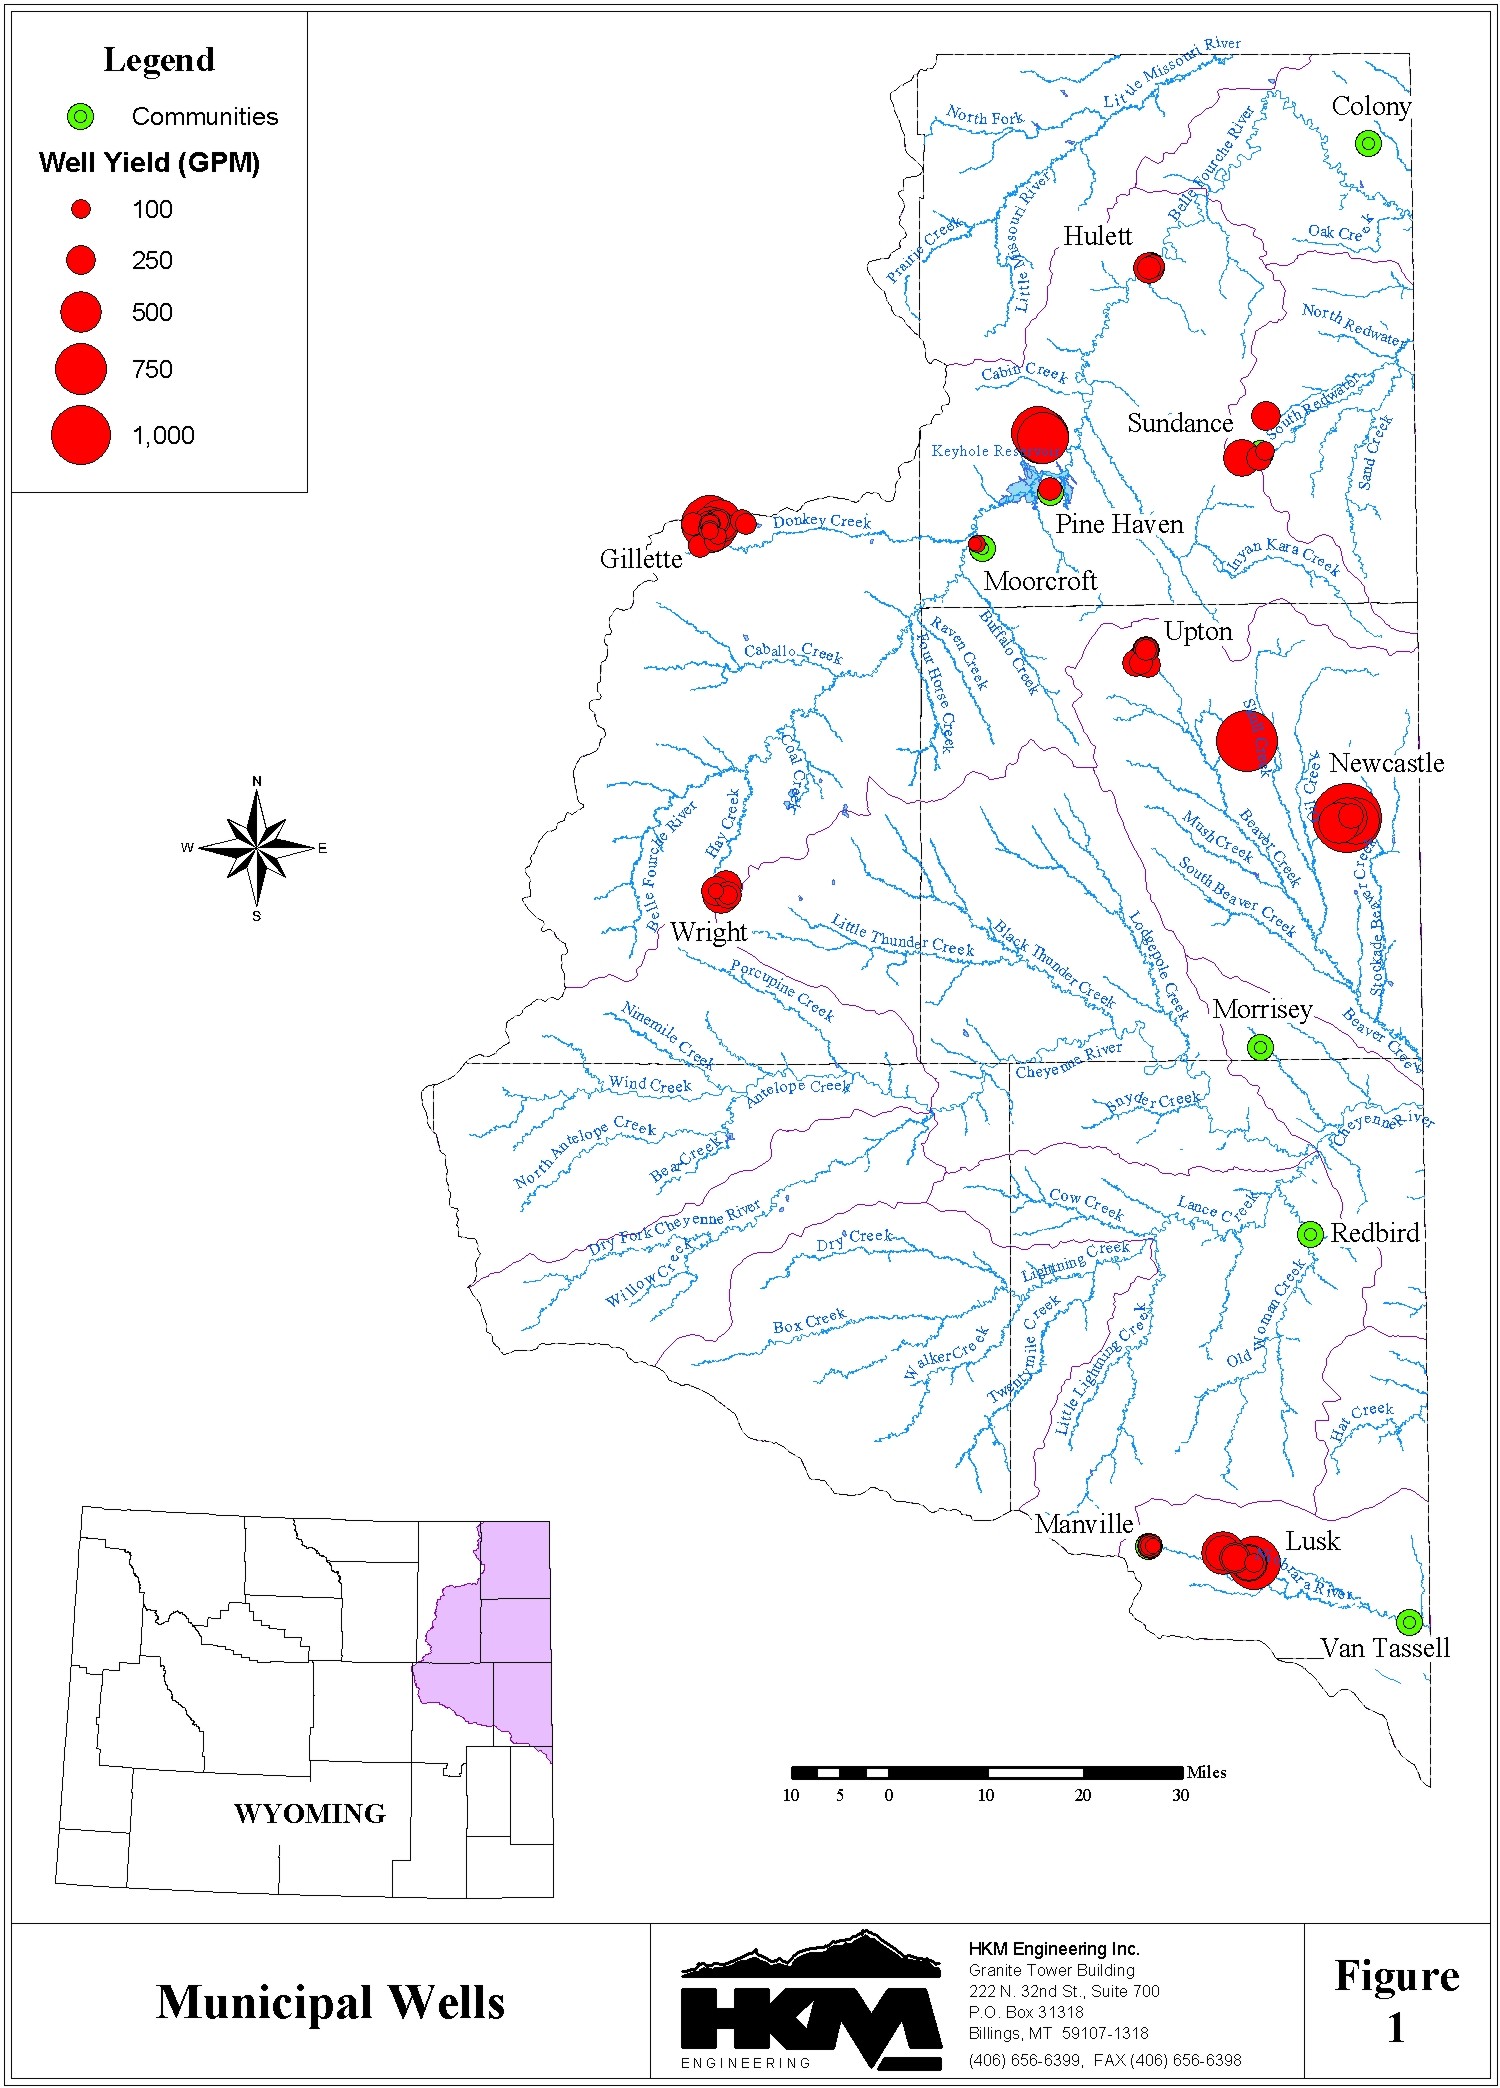 Municipal Wells, Northeast Wyoming River Basins